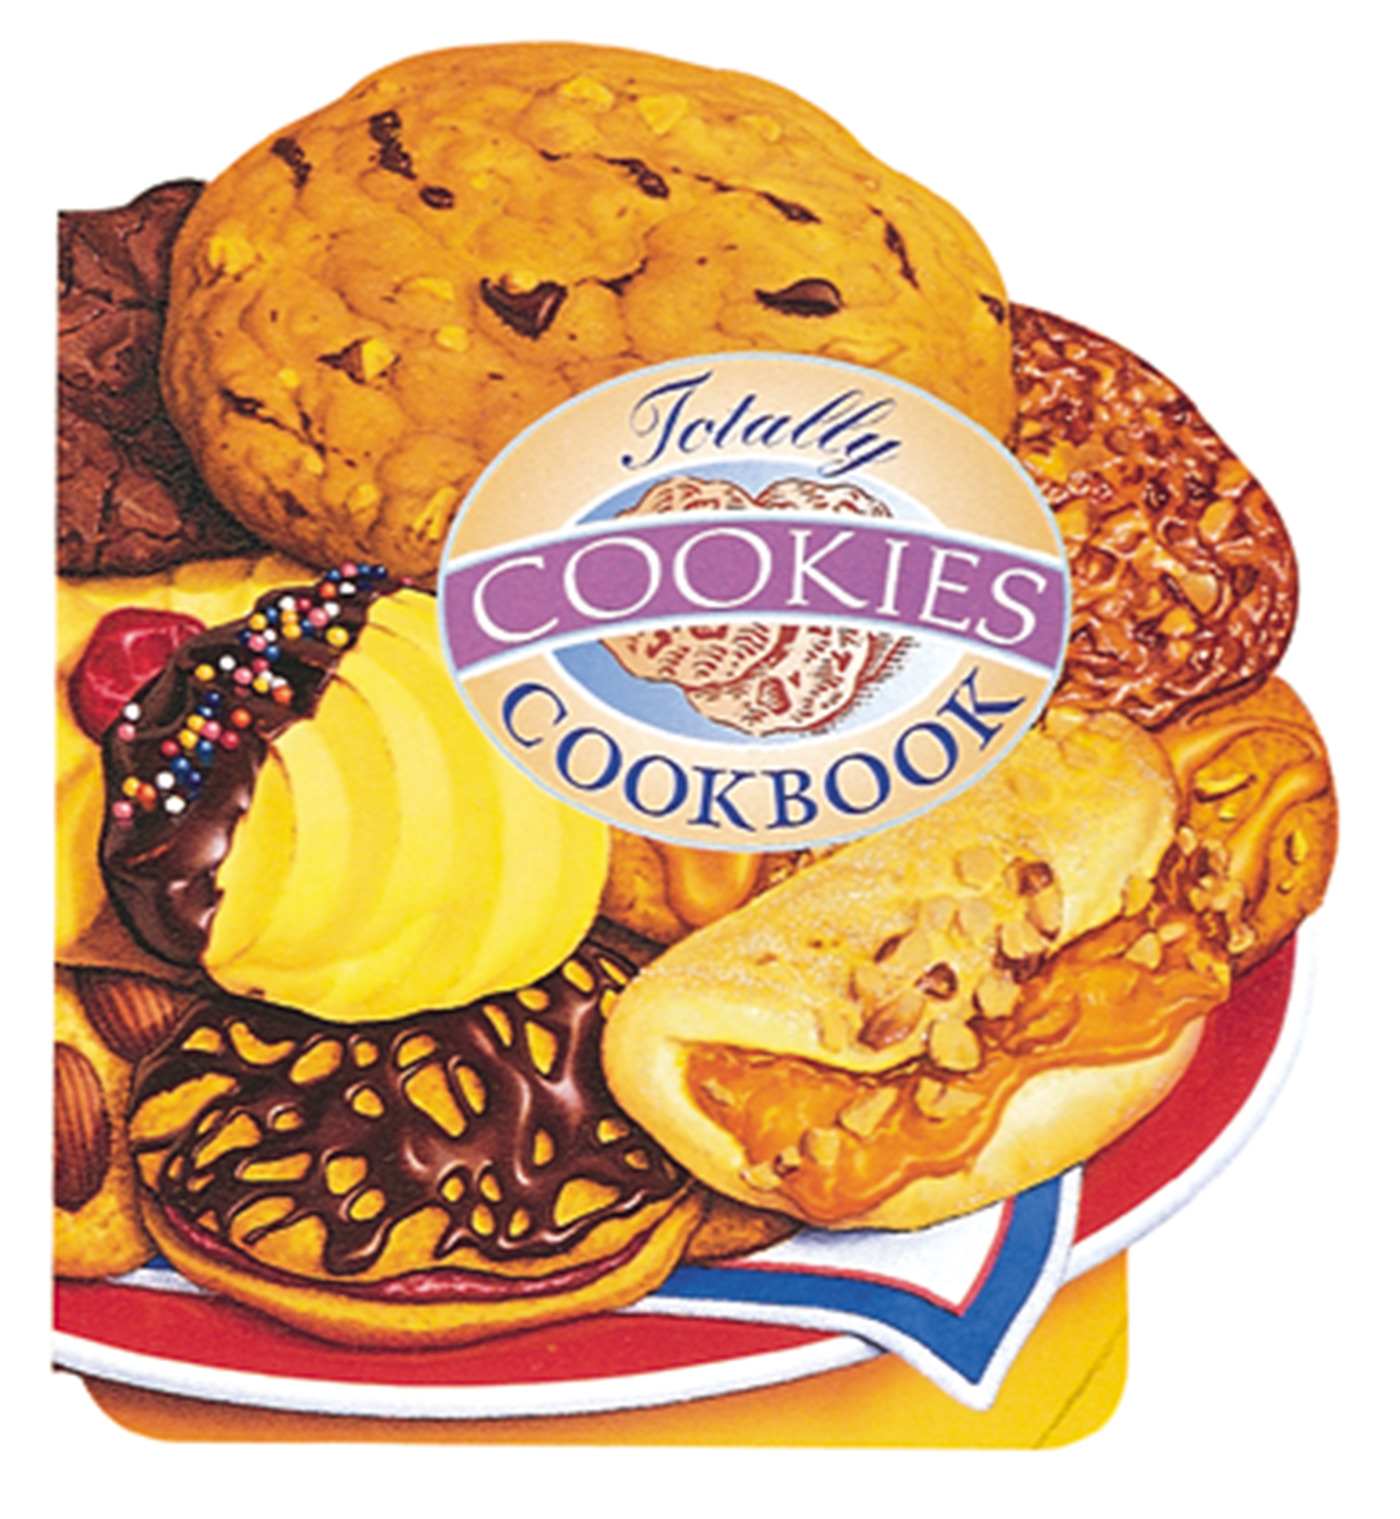 Read cookie. Печенье Бейкер. Totally Chile Pepper Cookbook by Helene Siegel (1994).